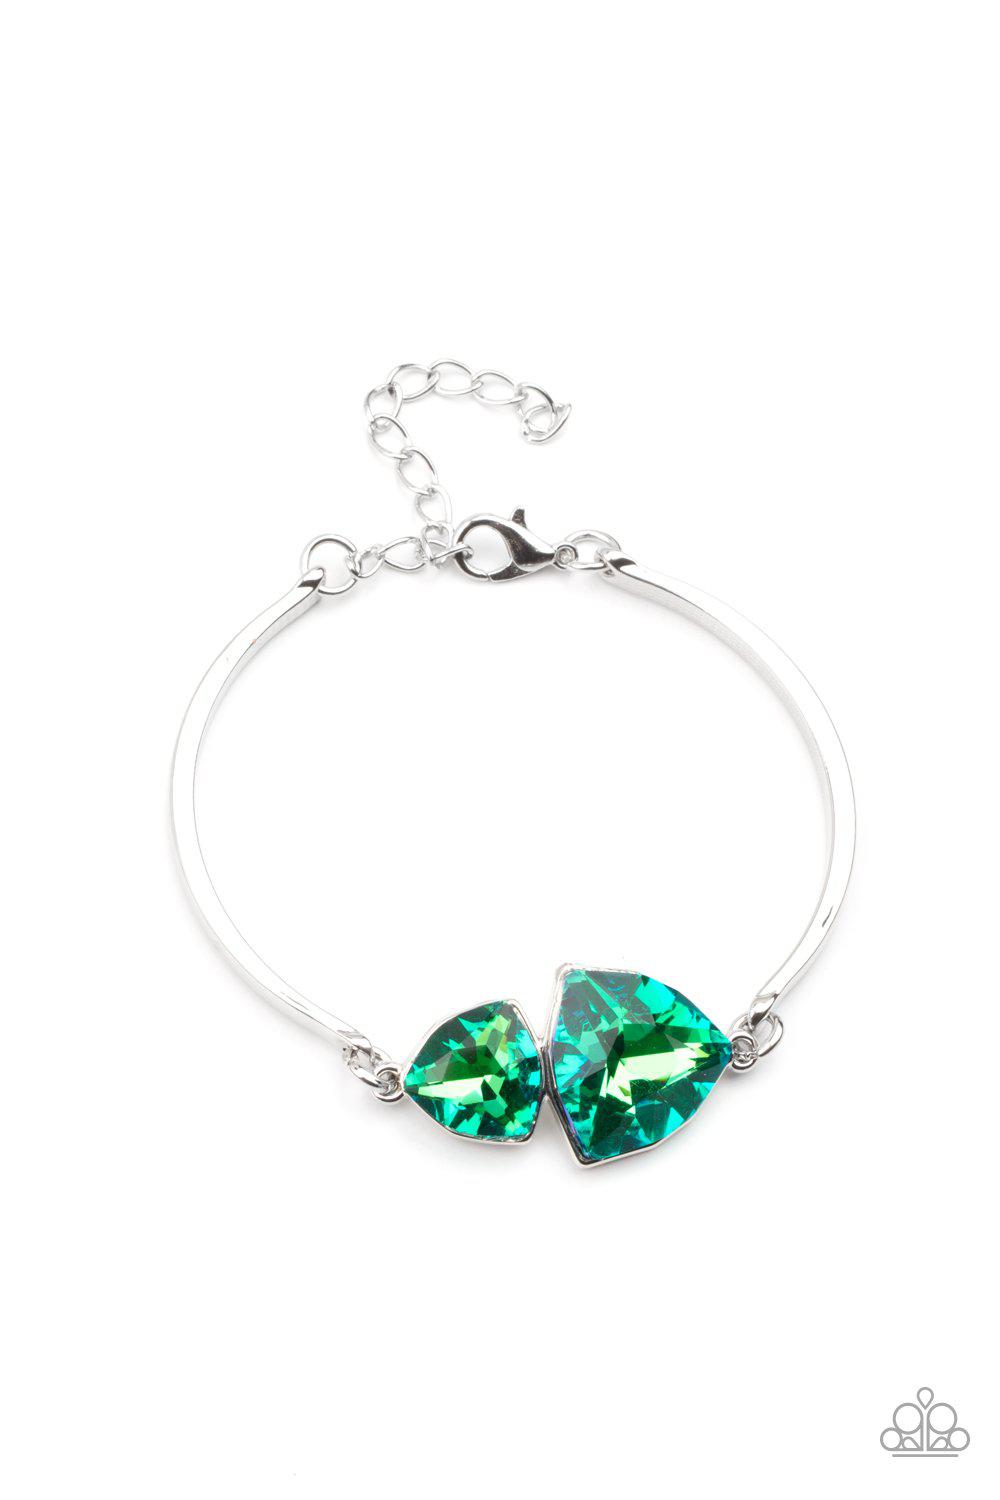 Deep Space Shimmer Iridescent Green Rhinestone Bracelet - Paparazzi Accessories- lightbox - CarasShop.com - $5 Jewelry by Cara Jewels